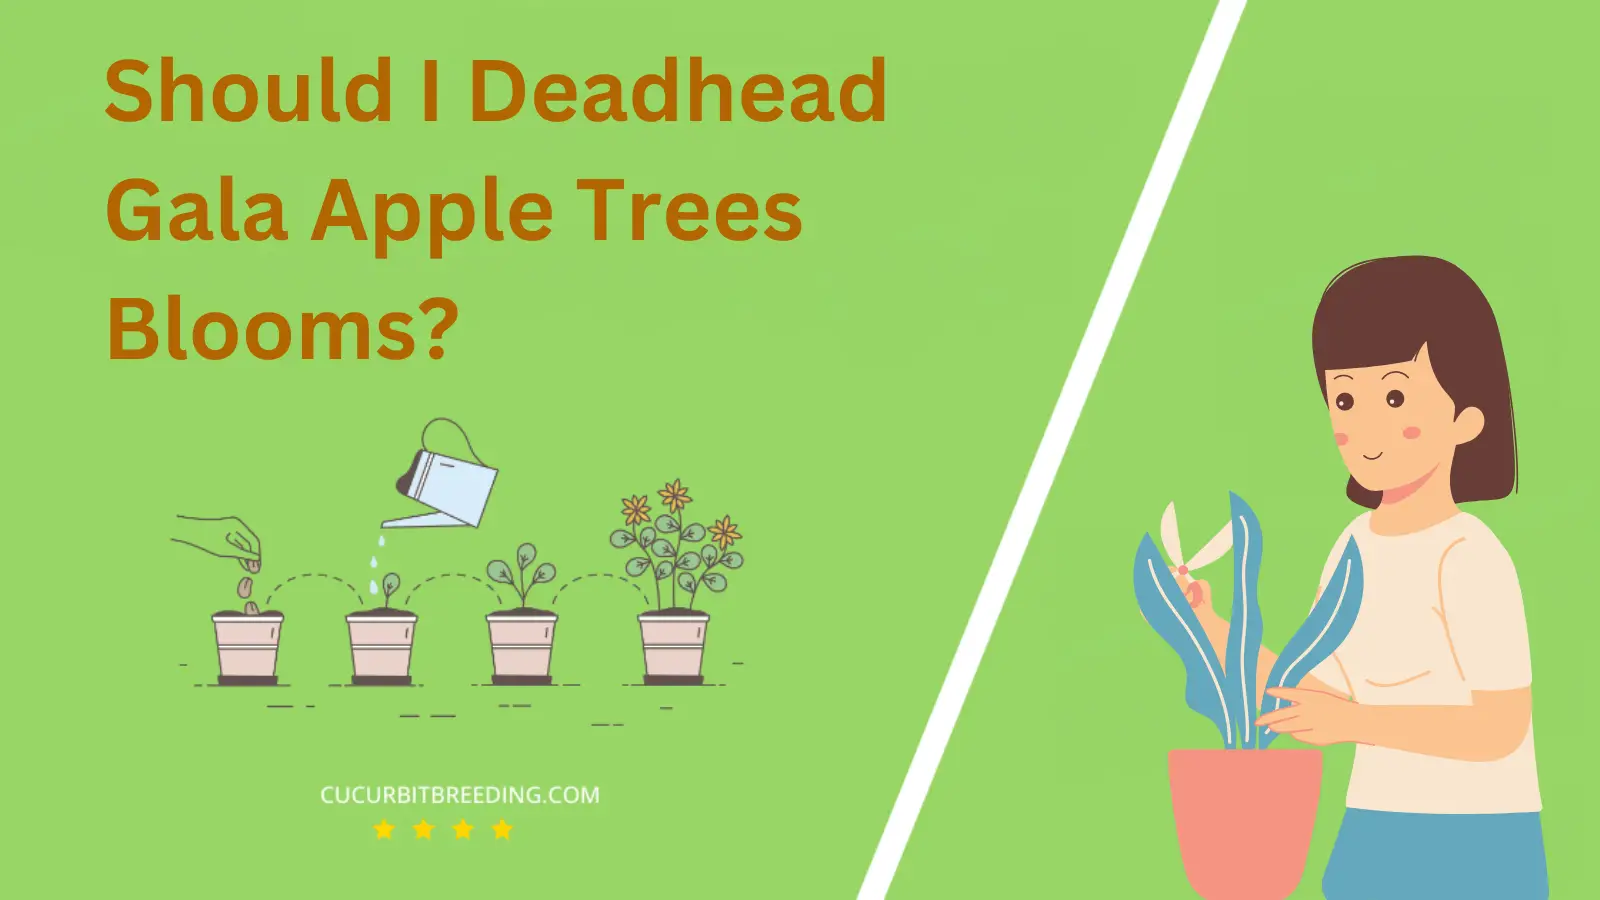 Should I Deadhead Gala Apple Trees Blooms?